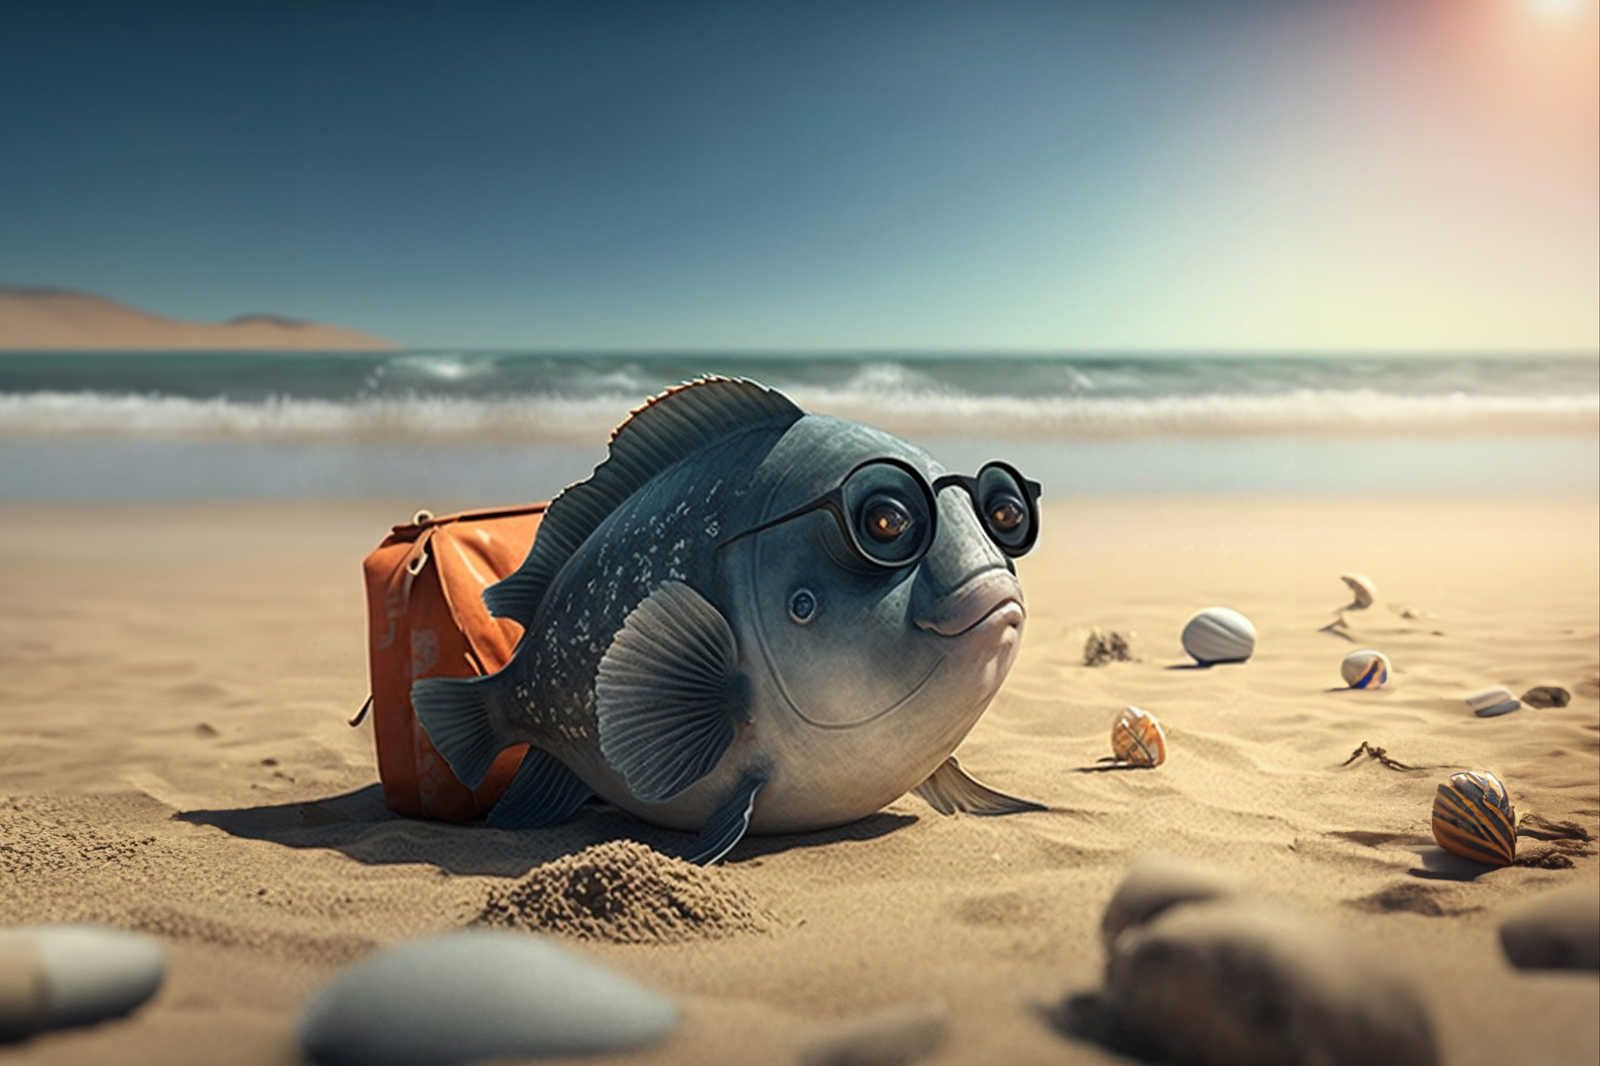             KI-Leinwandbild »Fishy Beachday« – 90 cm x 60 cm
        